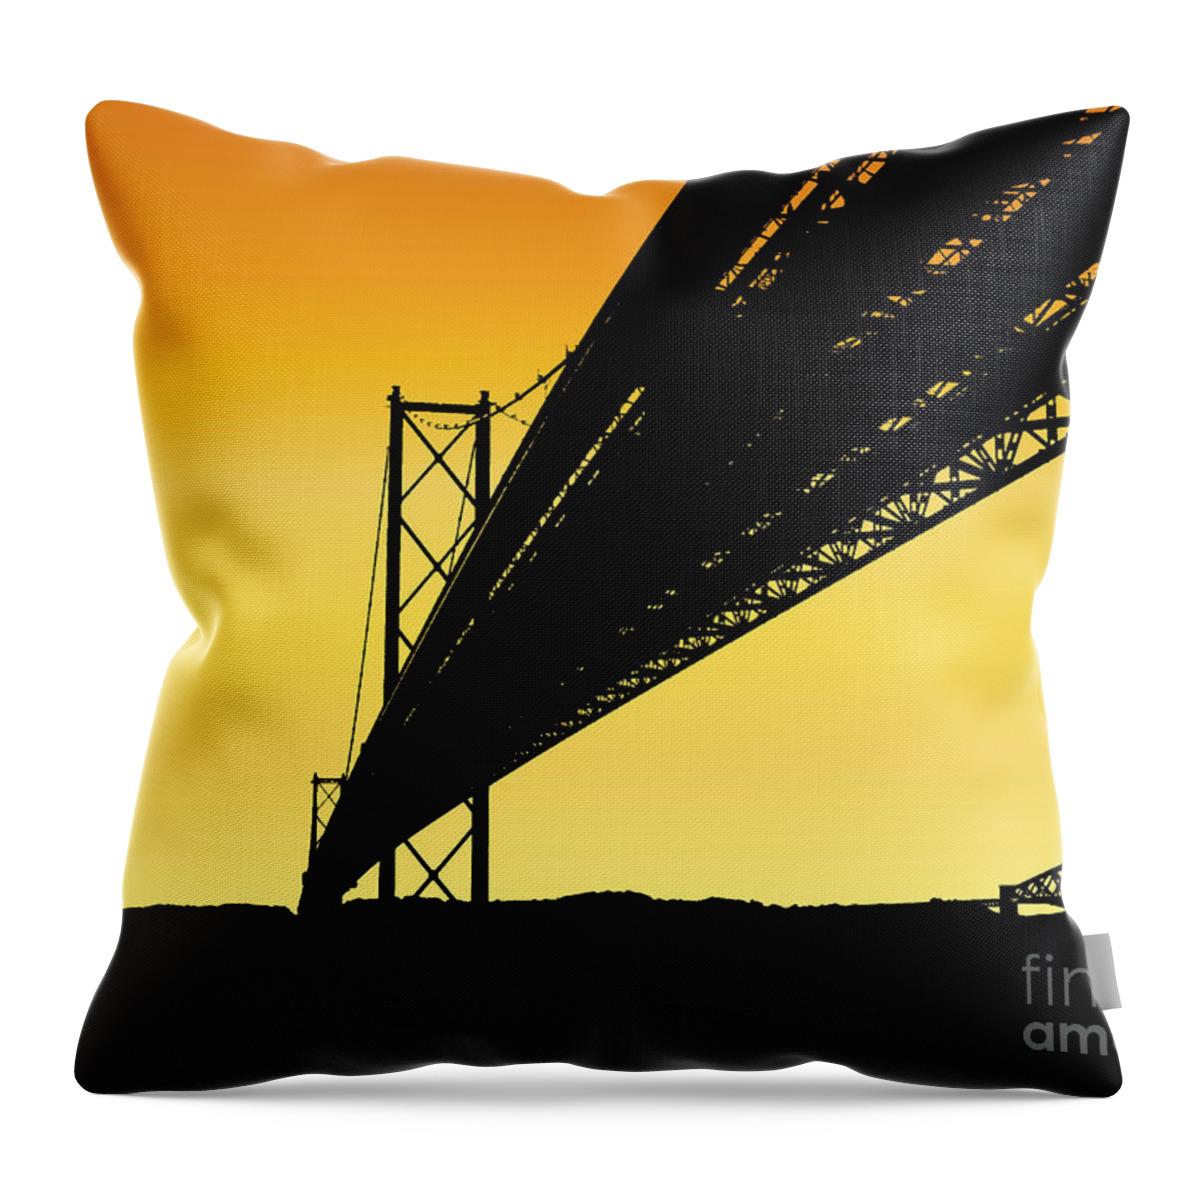 Forth Bridges Silhouette Throw Pillow featuring the photograph Forth Bridges Silhouette by Yvonne Johnstone